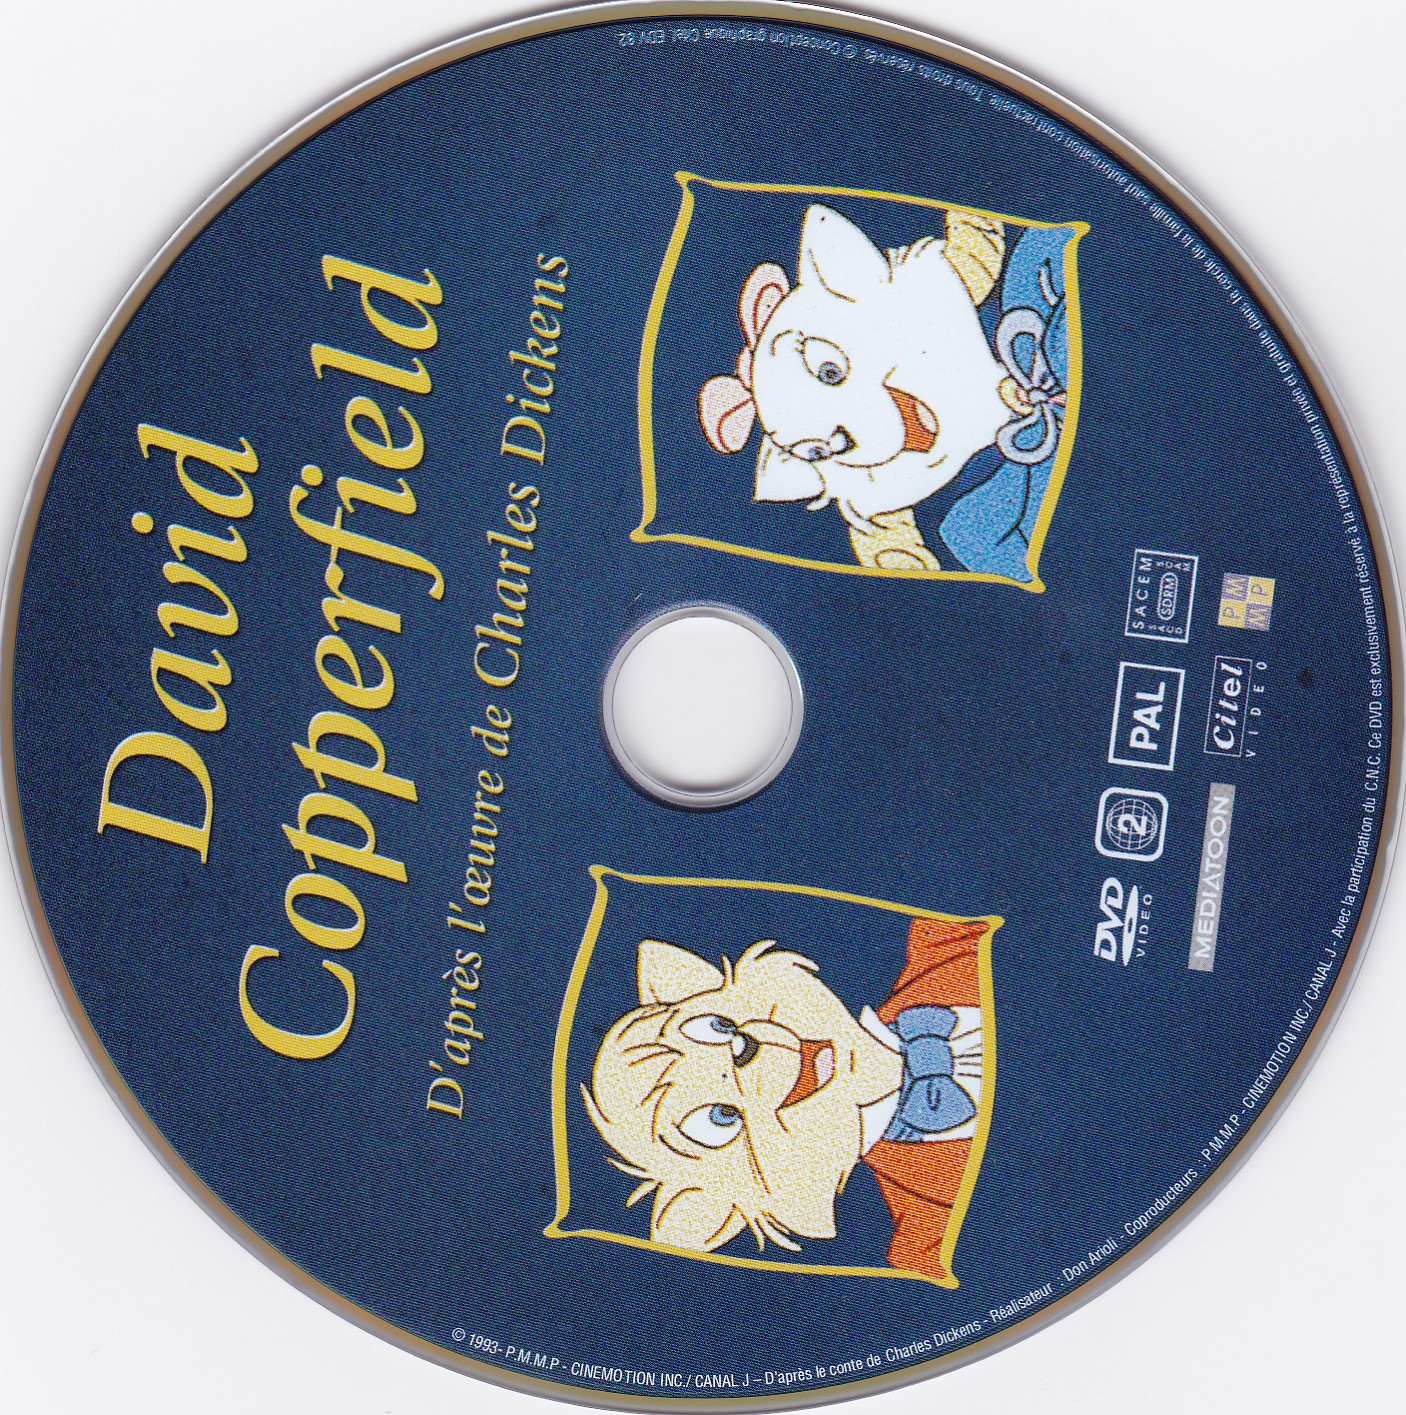 David Copperfield 1993 (DA)